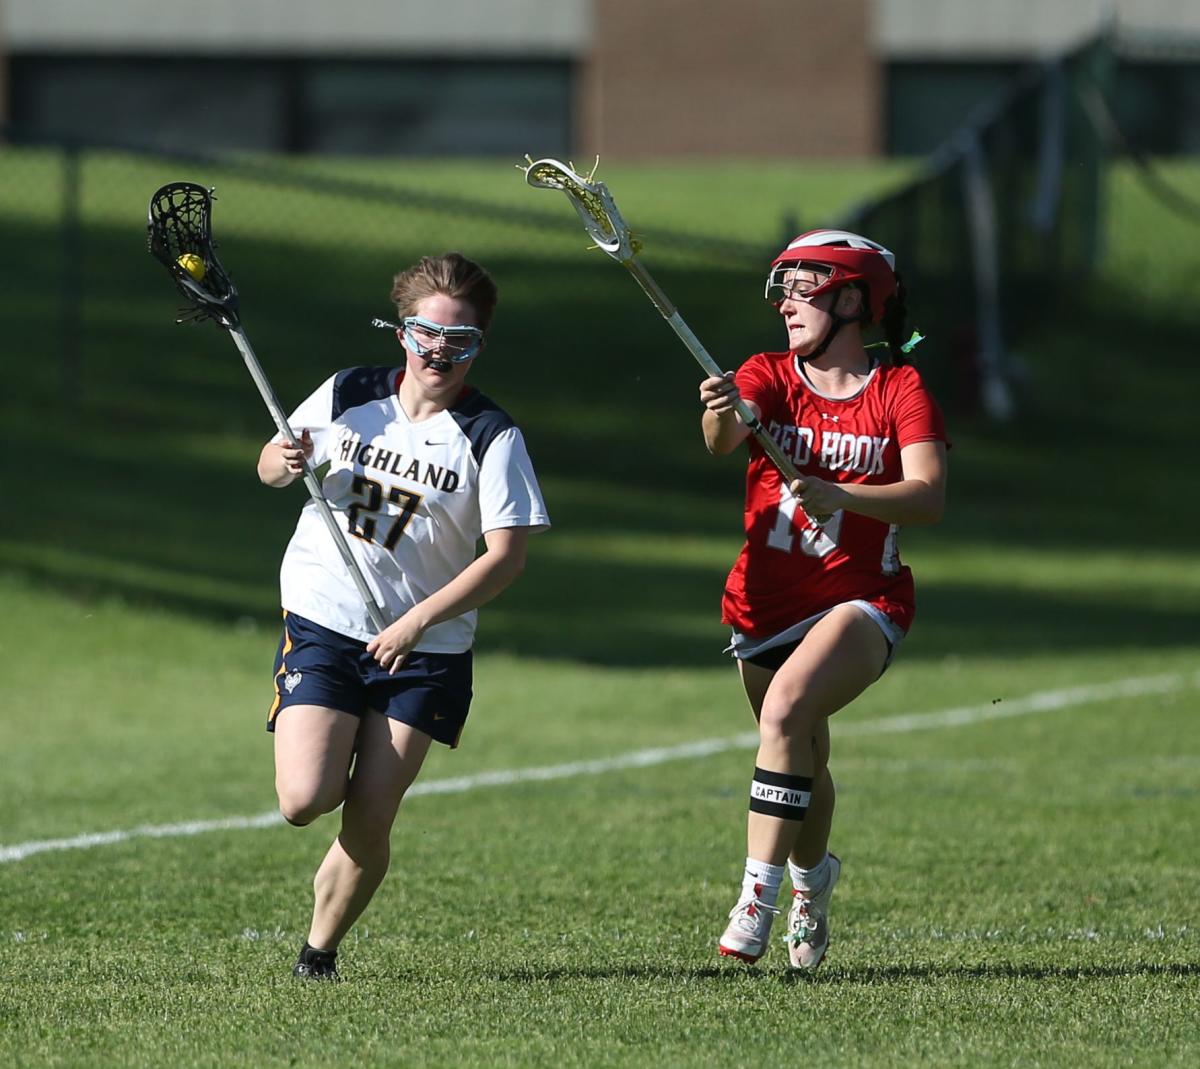 Girls lacrosse: VanZandt, defense lead surging Highland over Red Hook